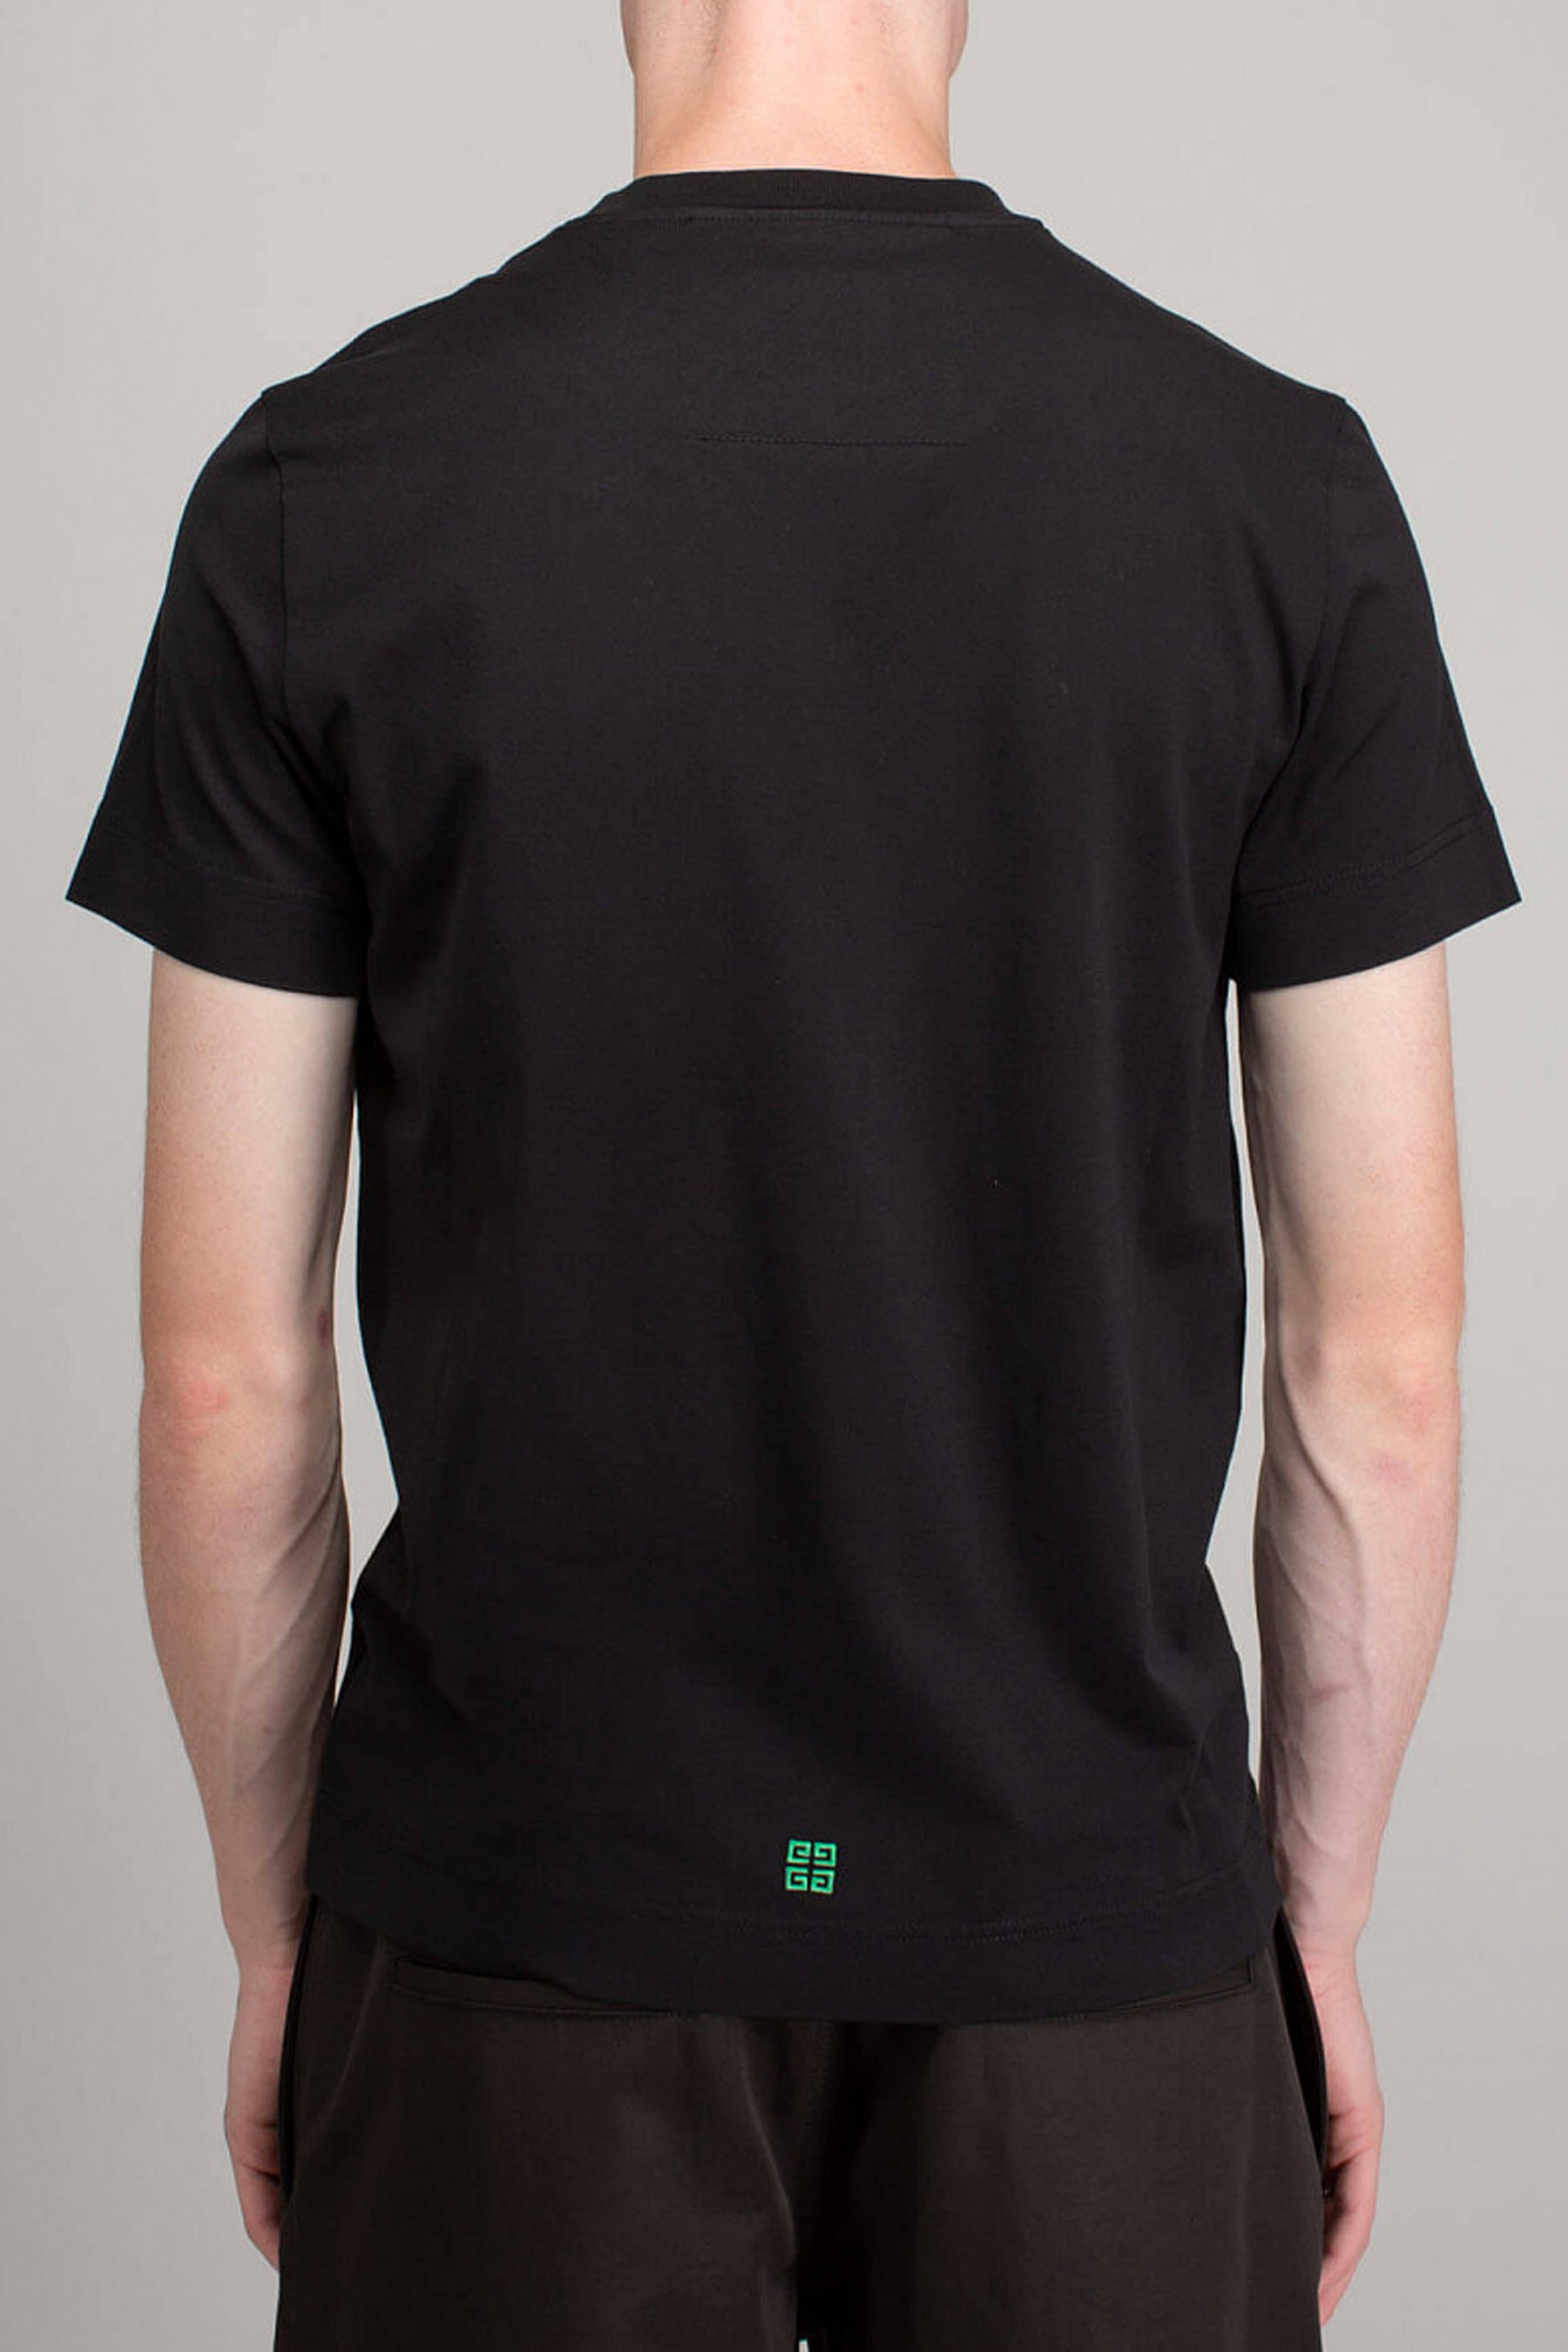 Givenchy Colorful Logo Black T-shirt